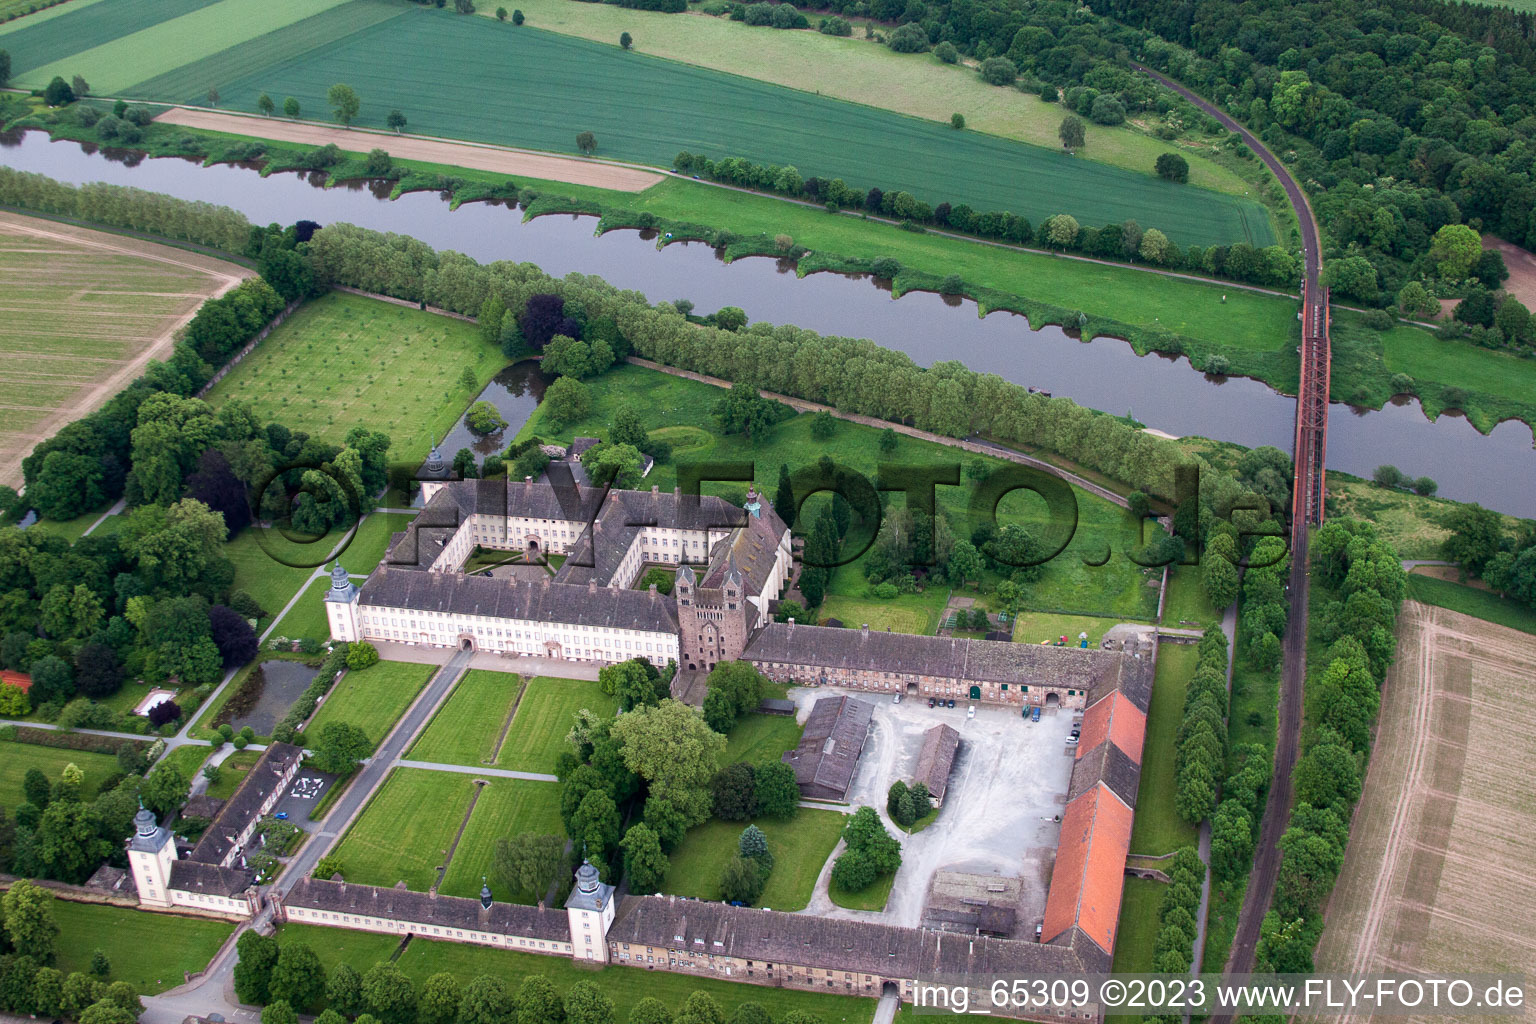 Drone image of Höxter in the state North Rhine-Westphalia, Germany